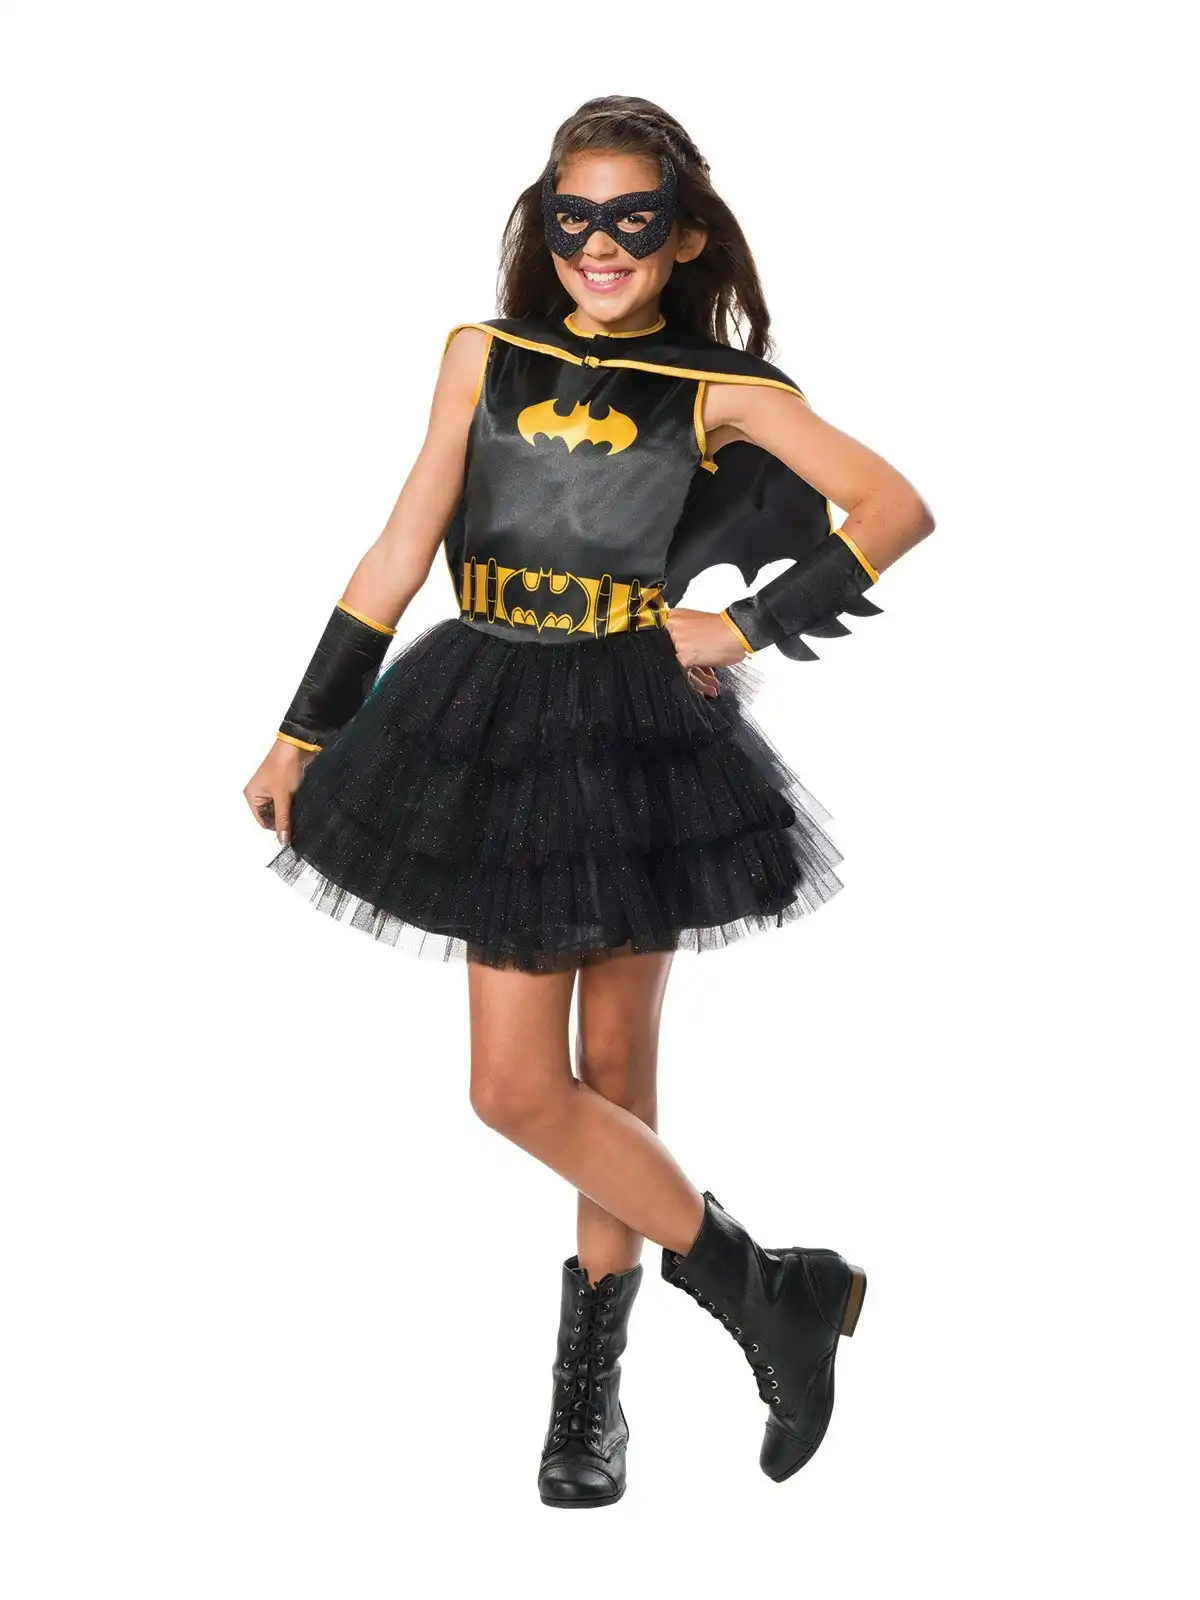 DC Comics Justice League Batgirl Opp Tutu Dress Kids Halloween Costume Size 4-6